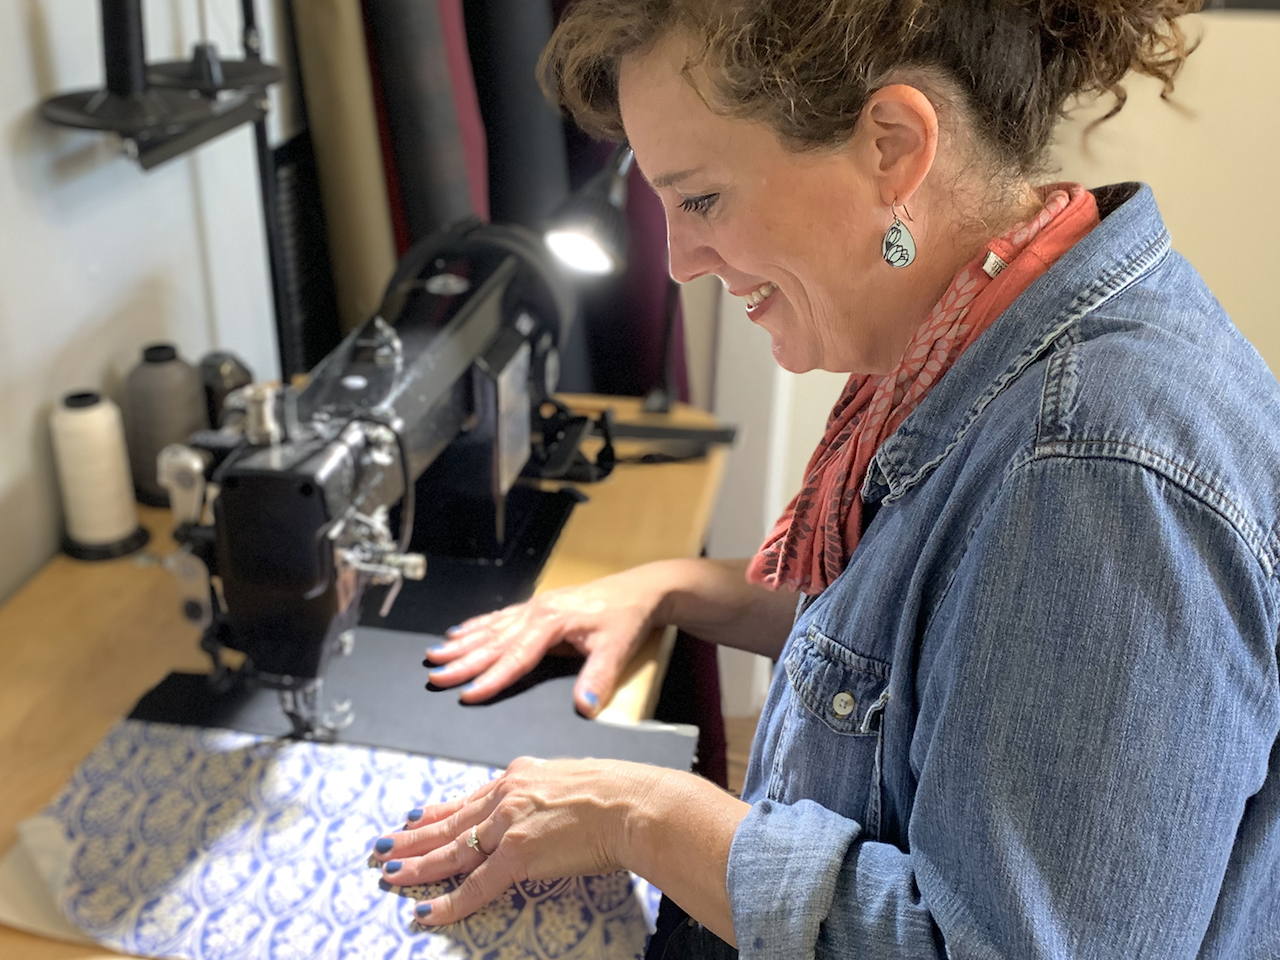 Heidi sewing with fabricator